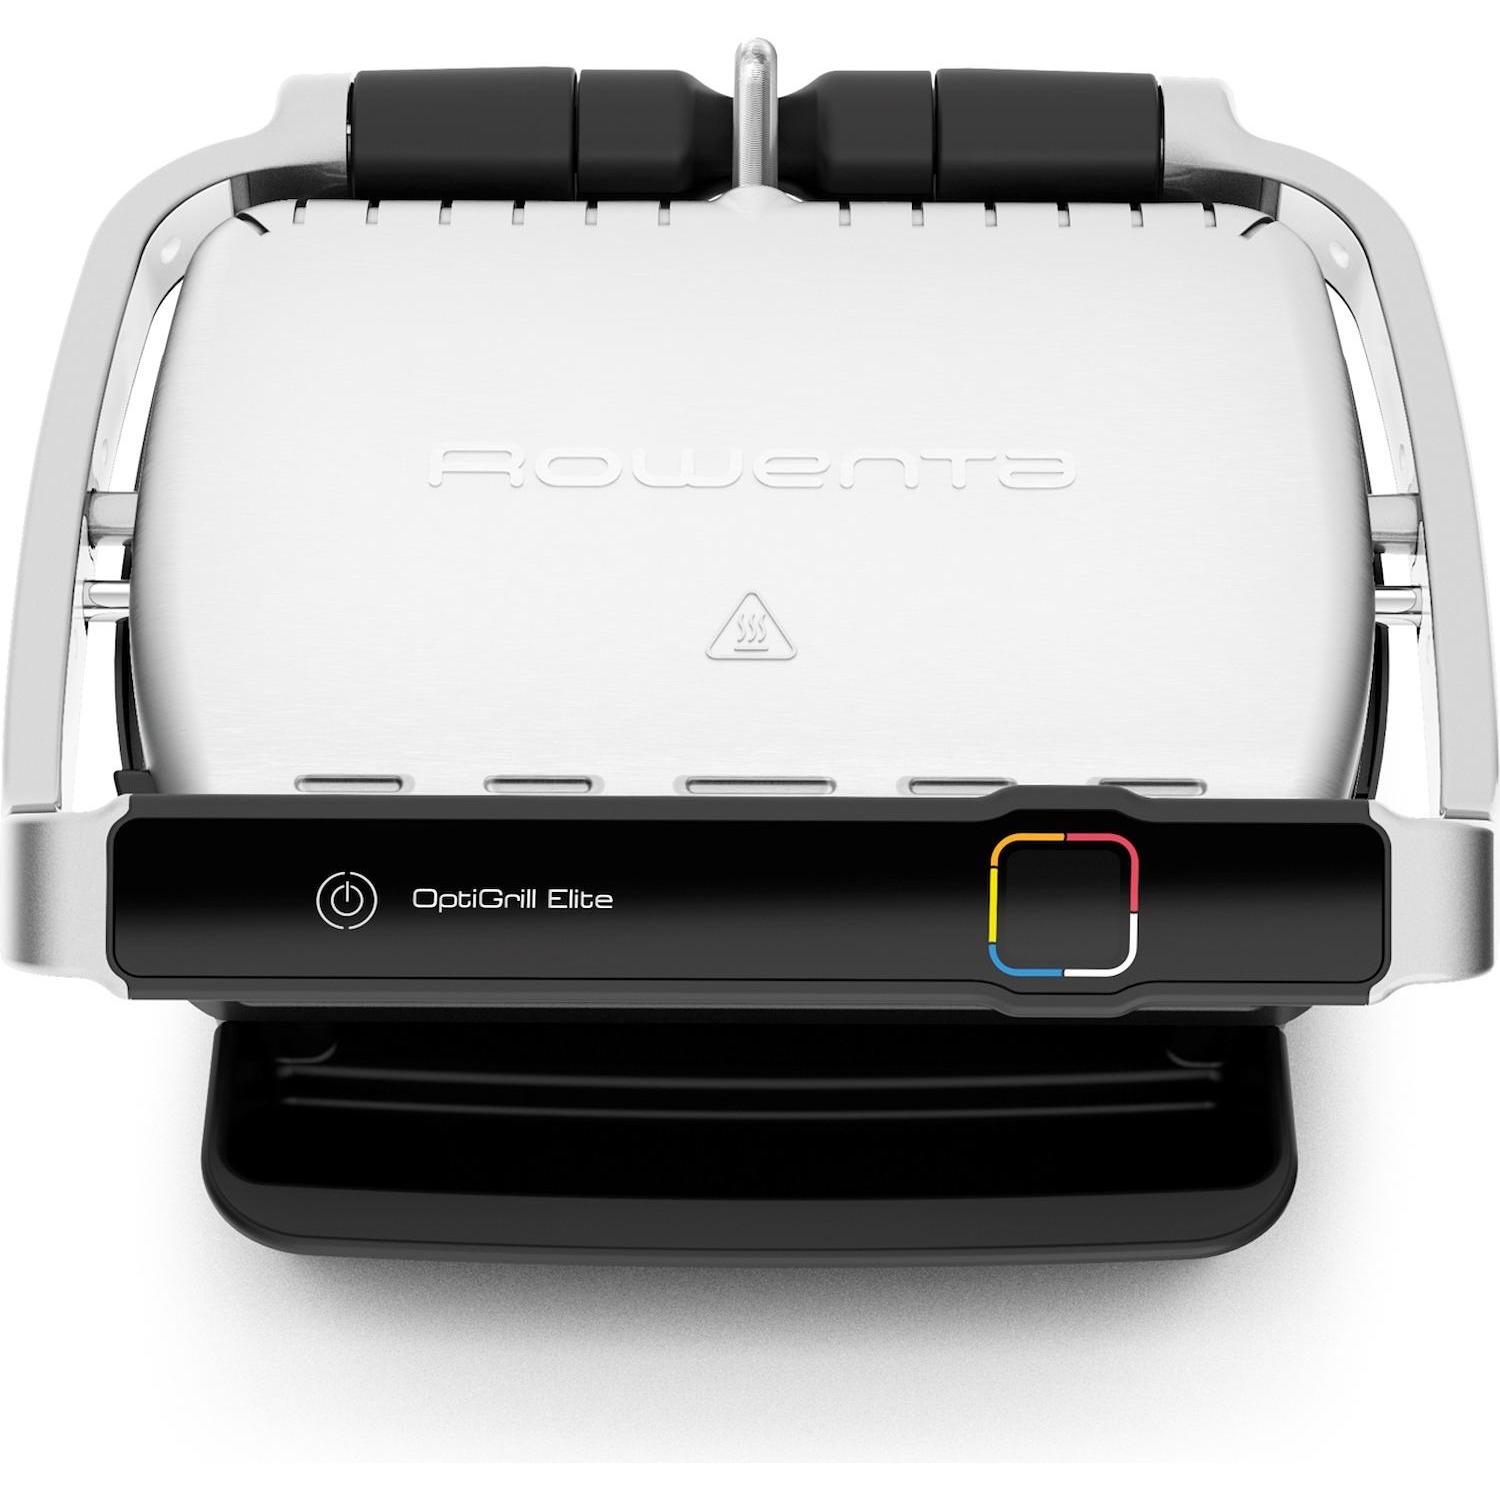 Bistecchiera elettrica Rowenta GR750D potenza 2000W con display digitale -  DIMOStore